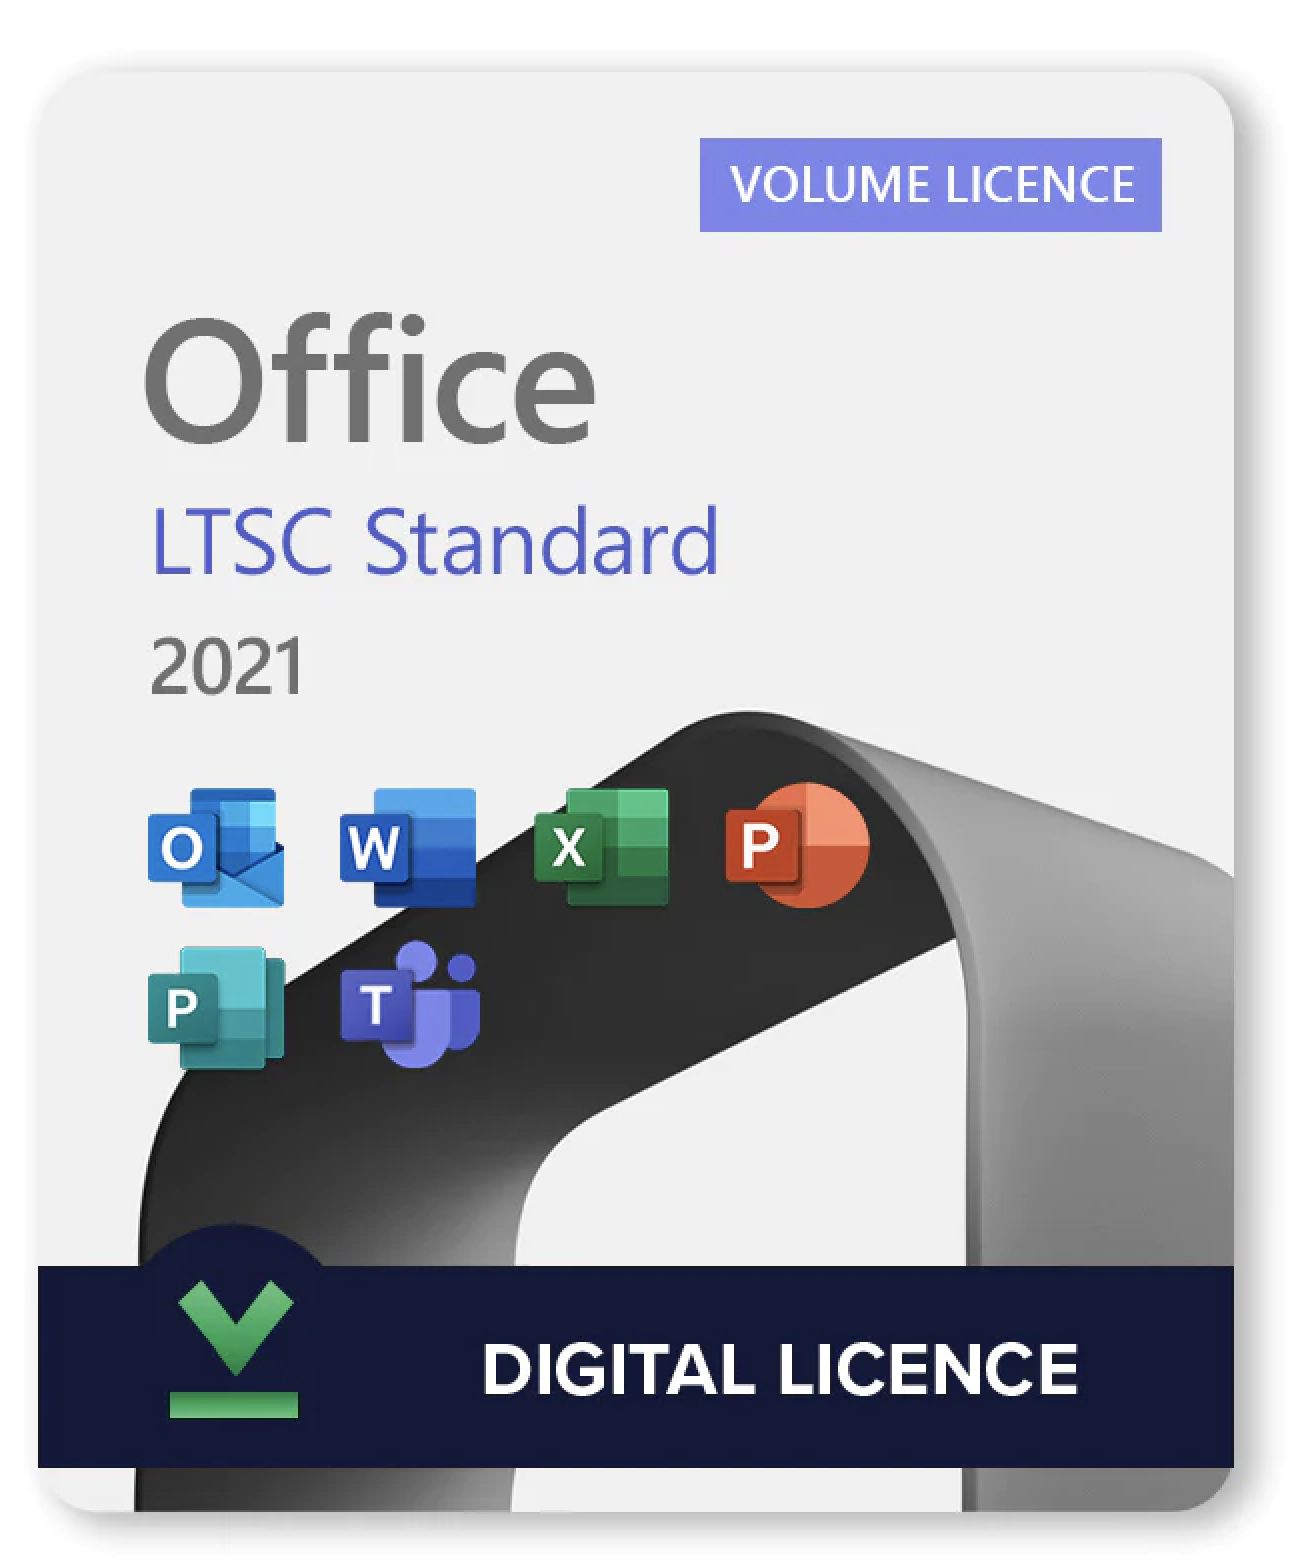 Microsoft Office 2021 Professional Plus, Mac, MacBooks Os, Volume License Office